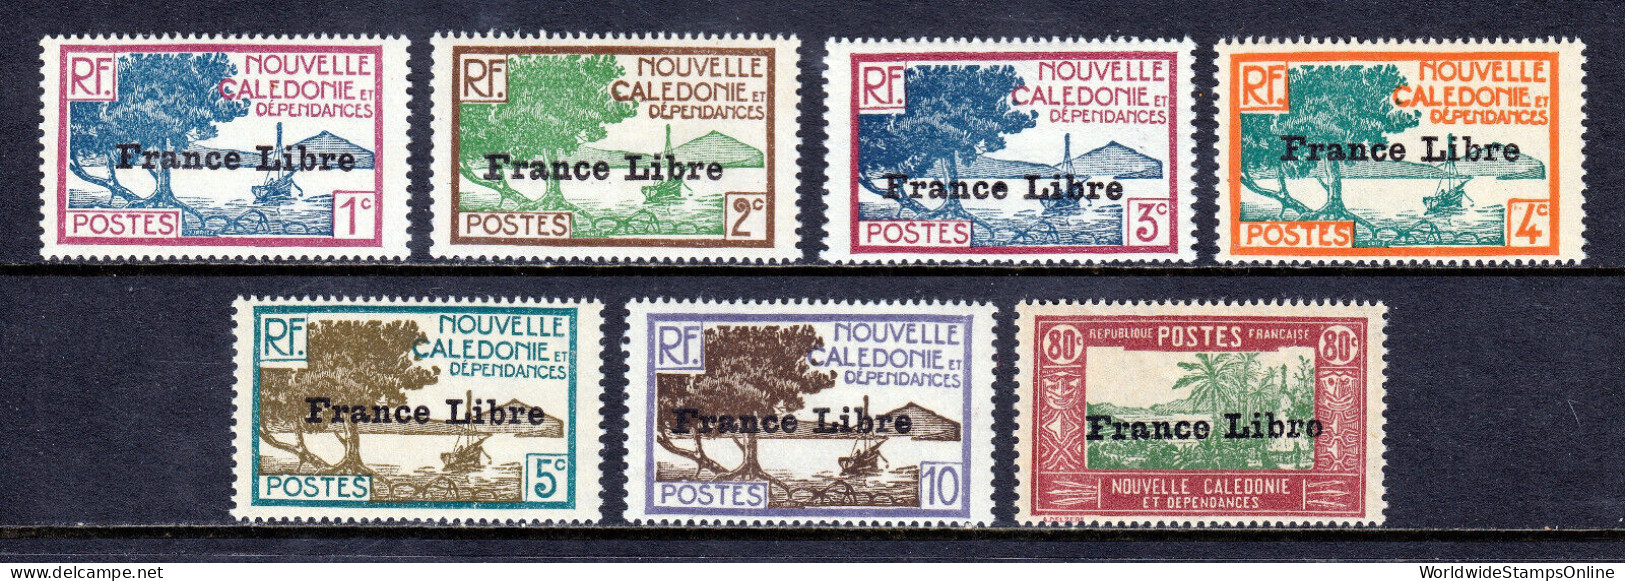 NEW CALEDONIA — SCOTT 217/236  — 1941 FRANCE LIBRE ISSUE — MH — SCV $99 - Ungebraucht